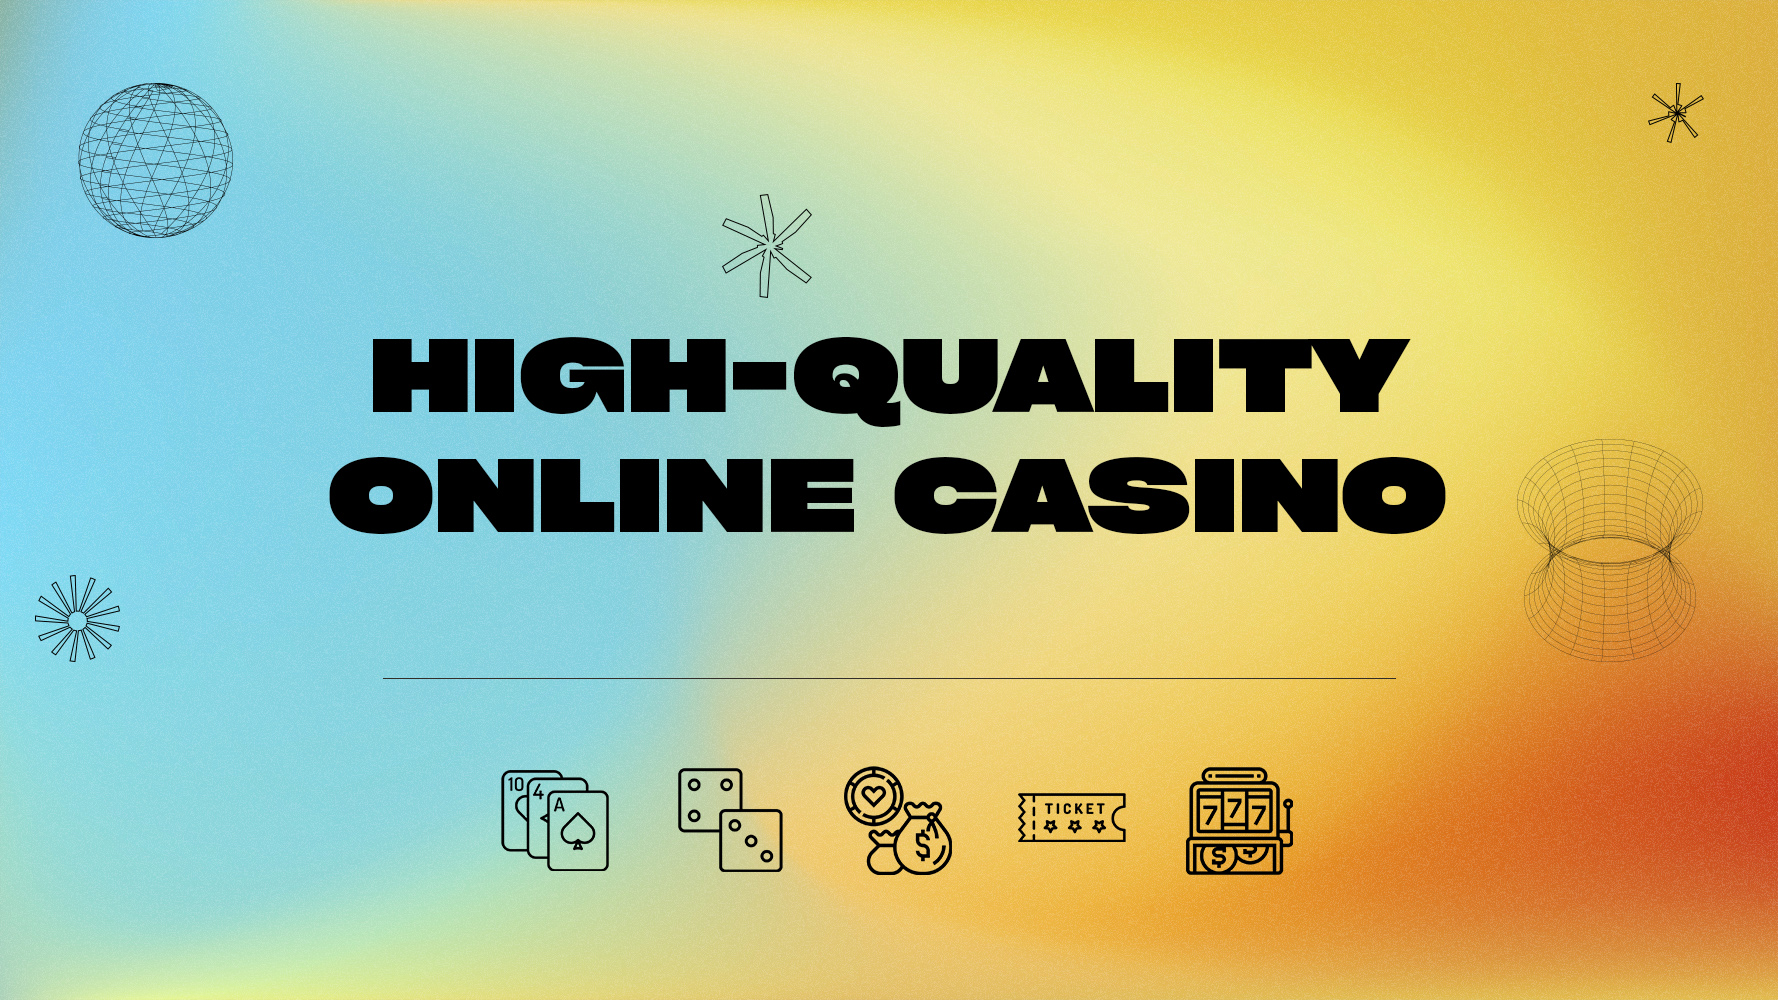 High-quality Online Casinos